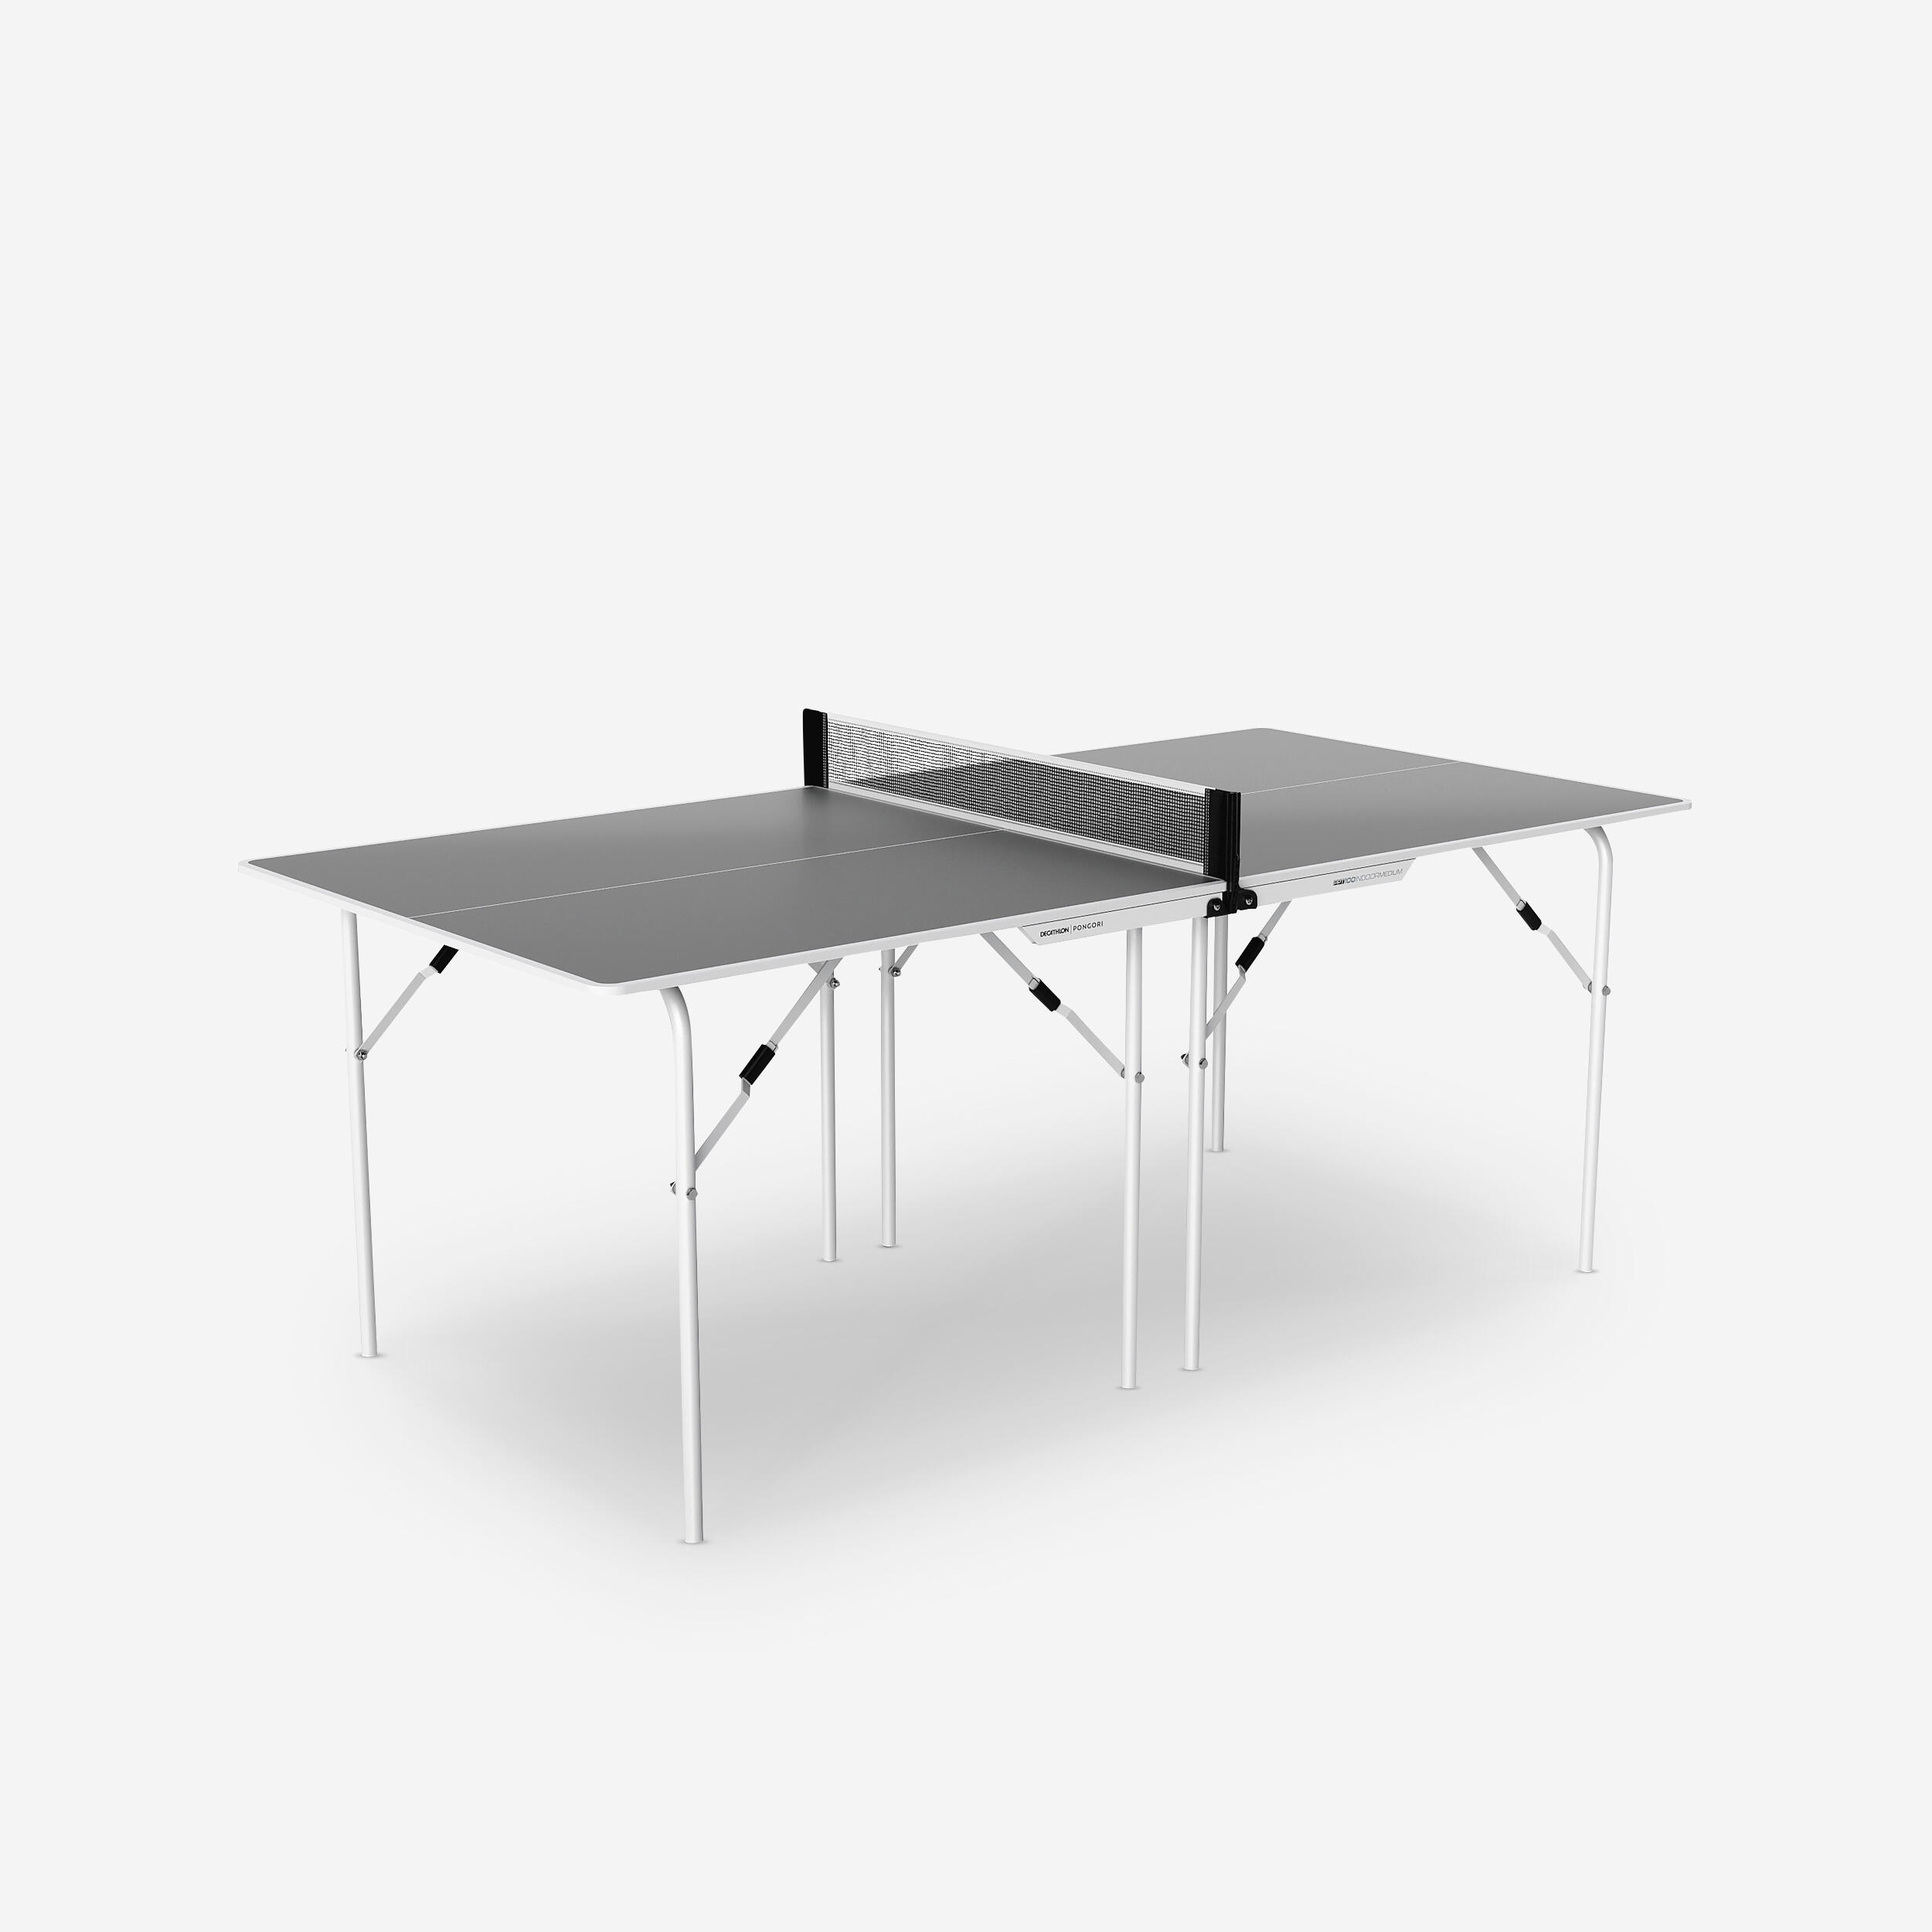 decathlon outdoor table tennis table